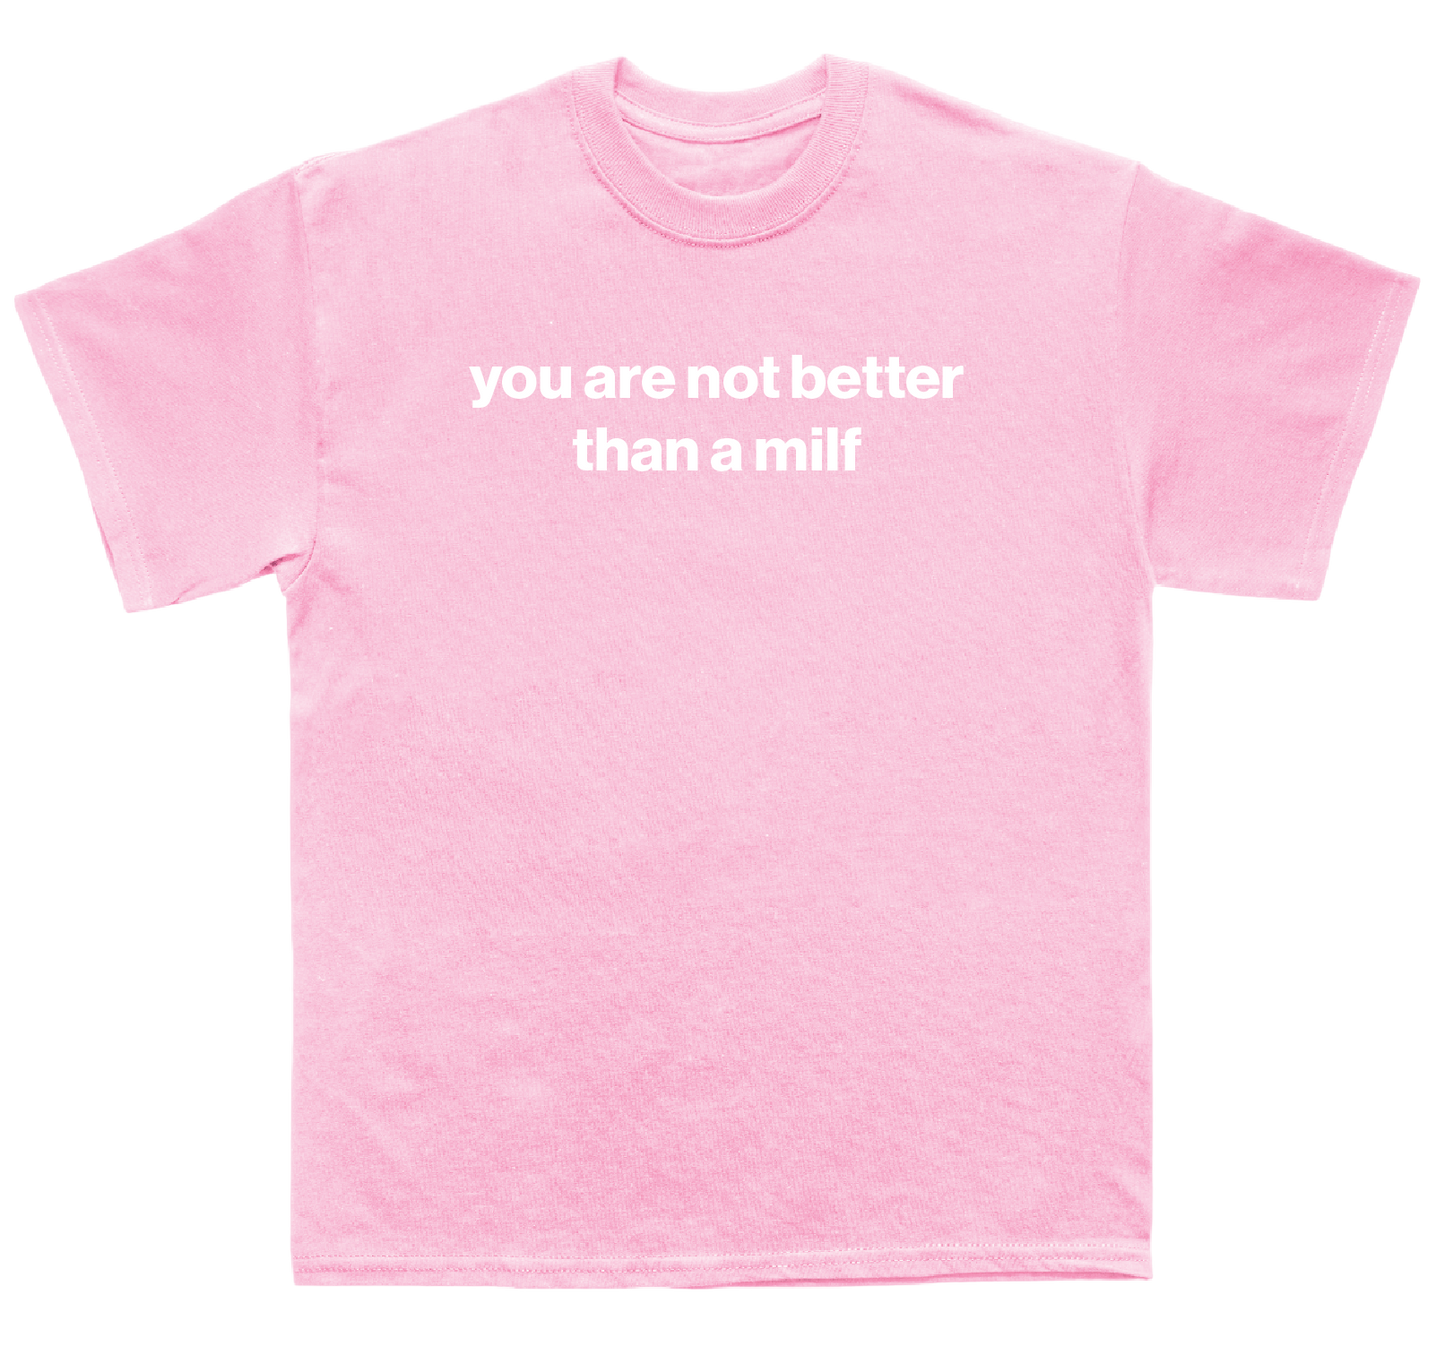 you are not better than a milf shirt